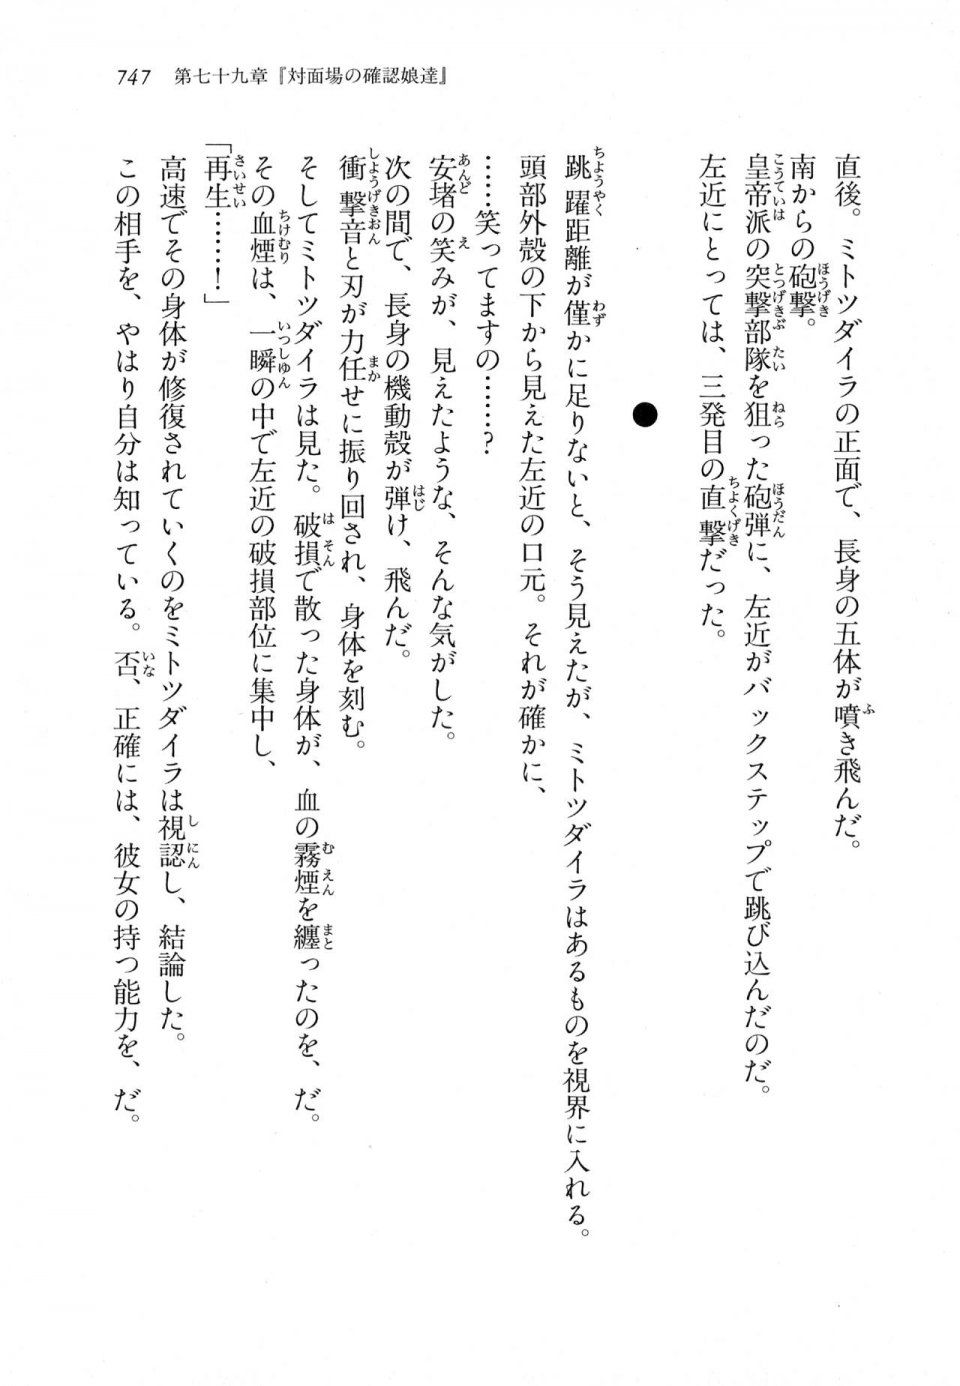 Kyoukai Senjou no Horizon LN Vol 18(7C) Part 2 - Photo #187